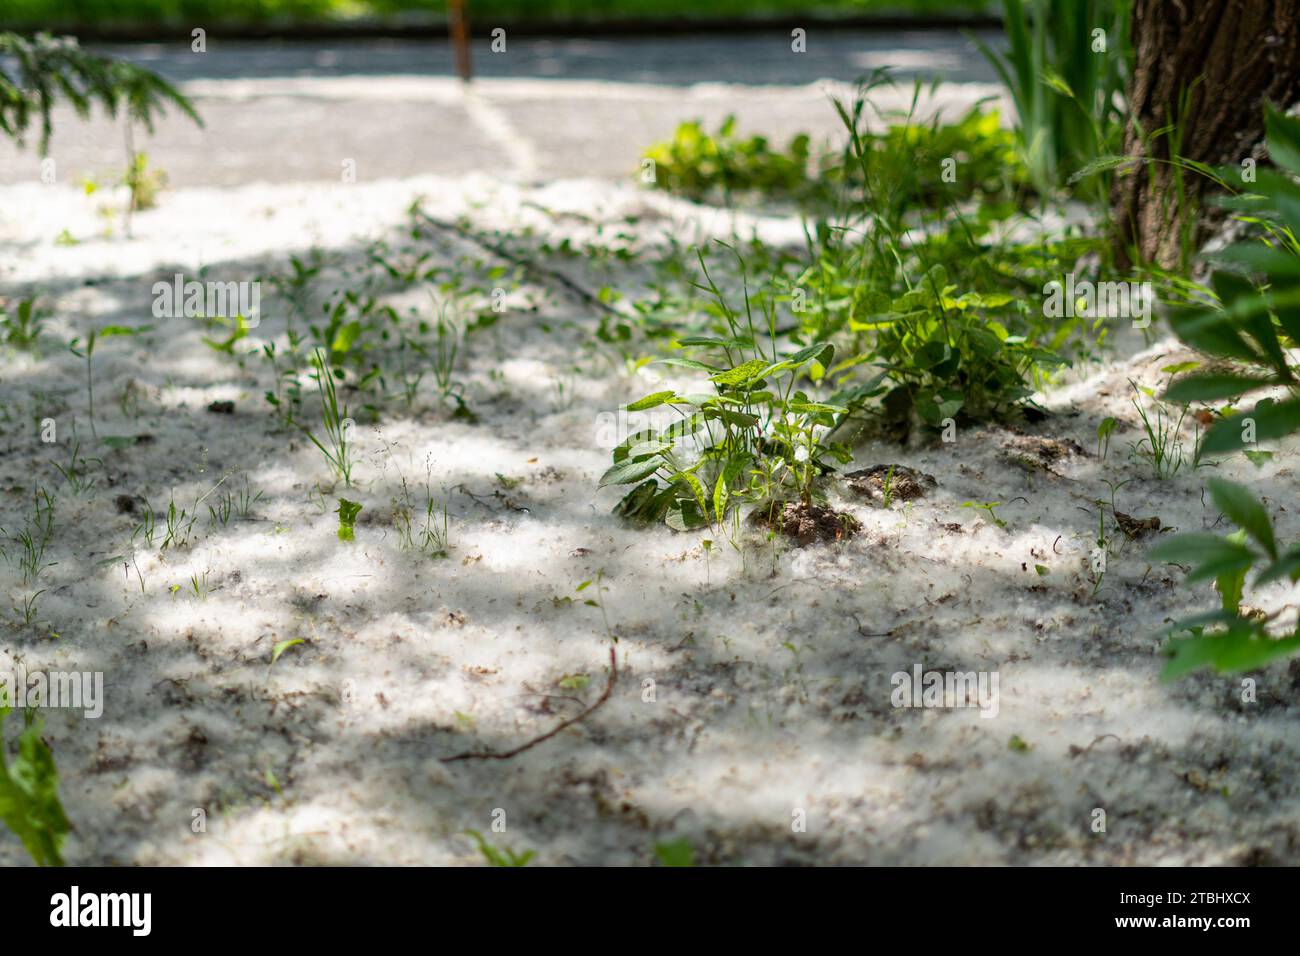 Poplar (populus alba) seeds covering the grassy ground Stock Photo